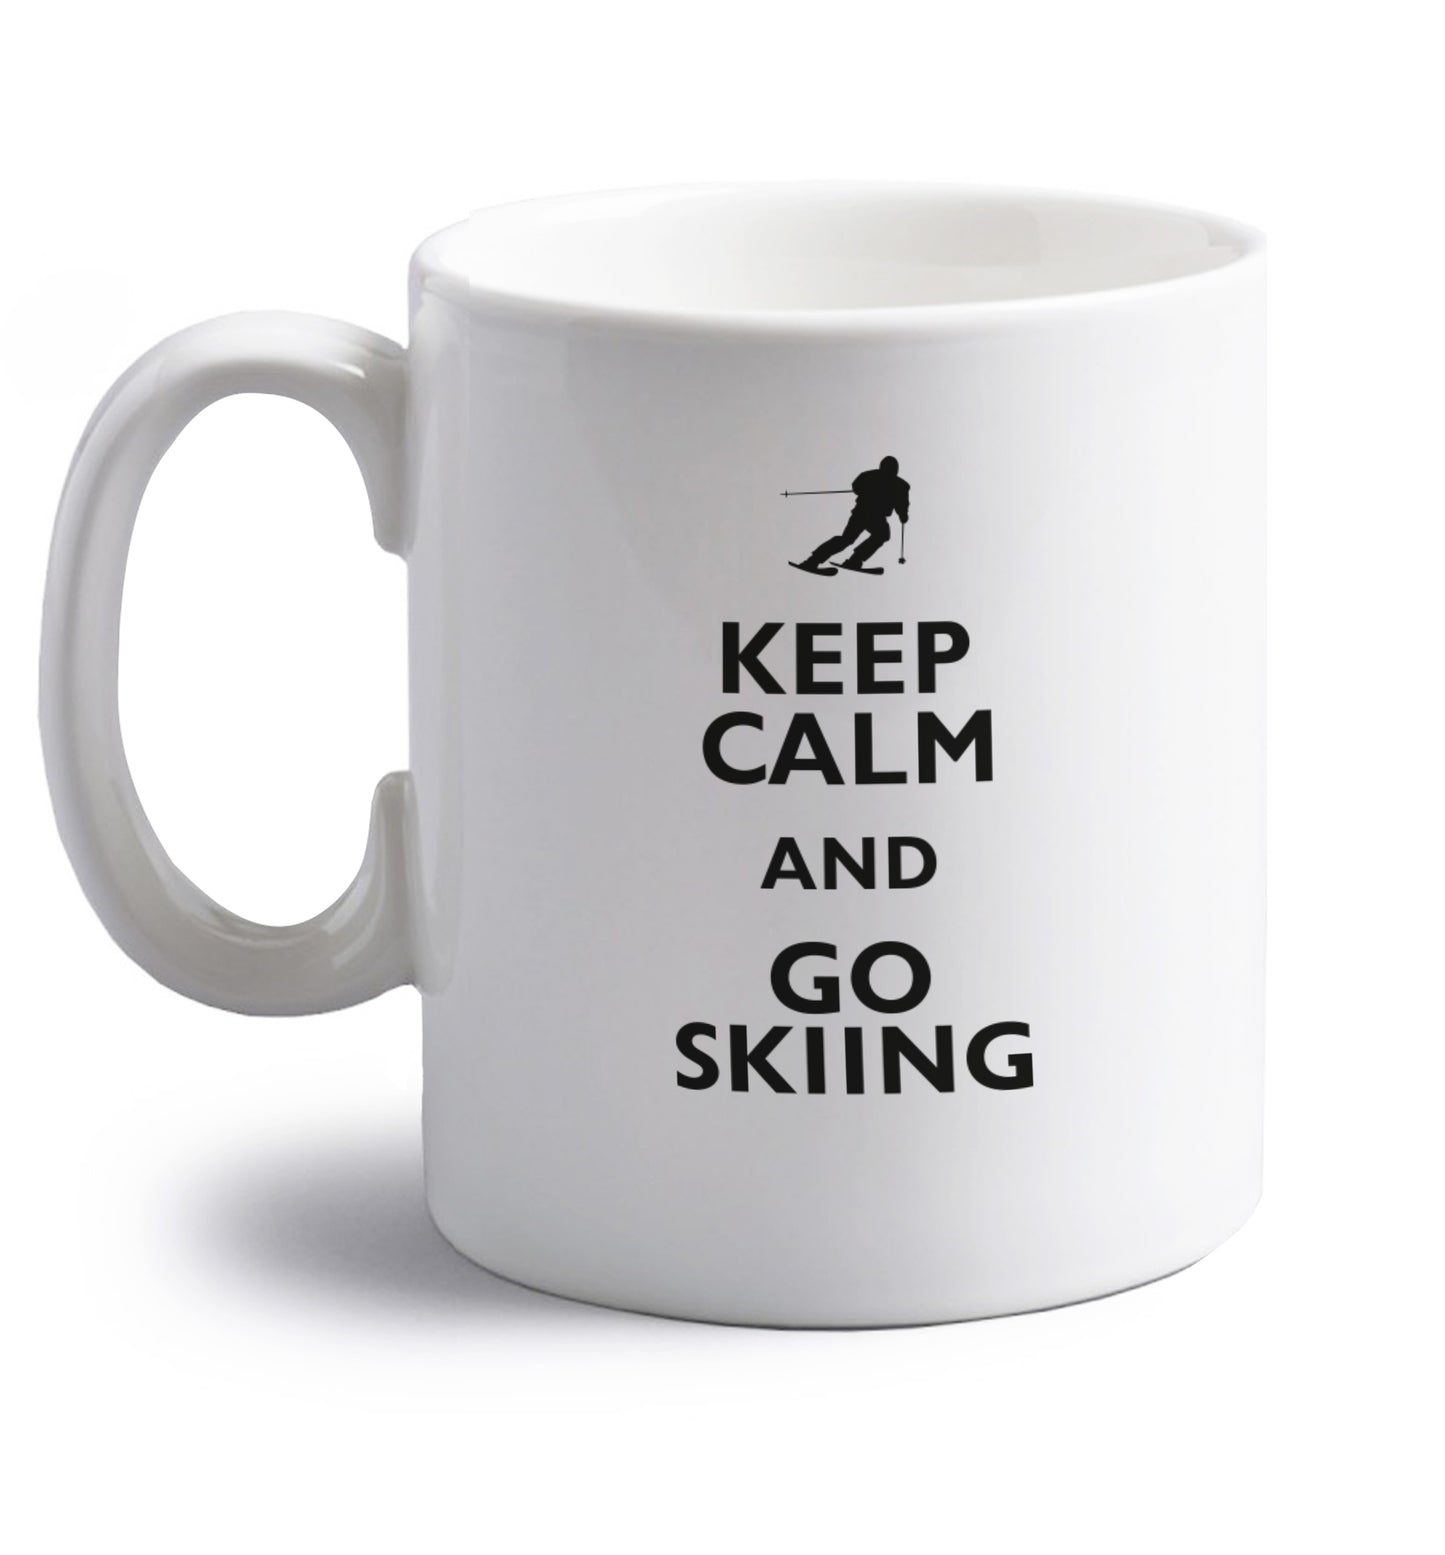 Keep calm and go skiing right handed white ceramic mug 